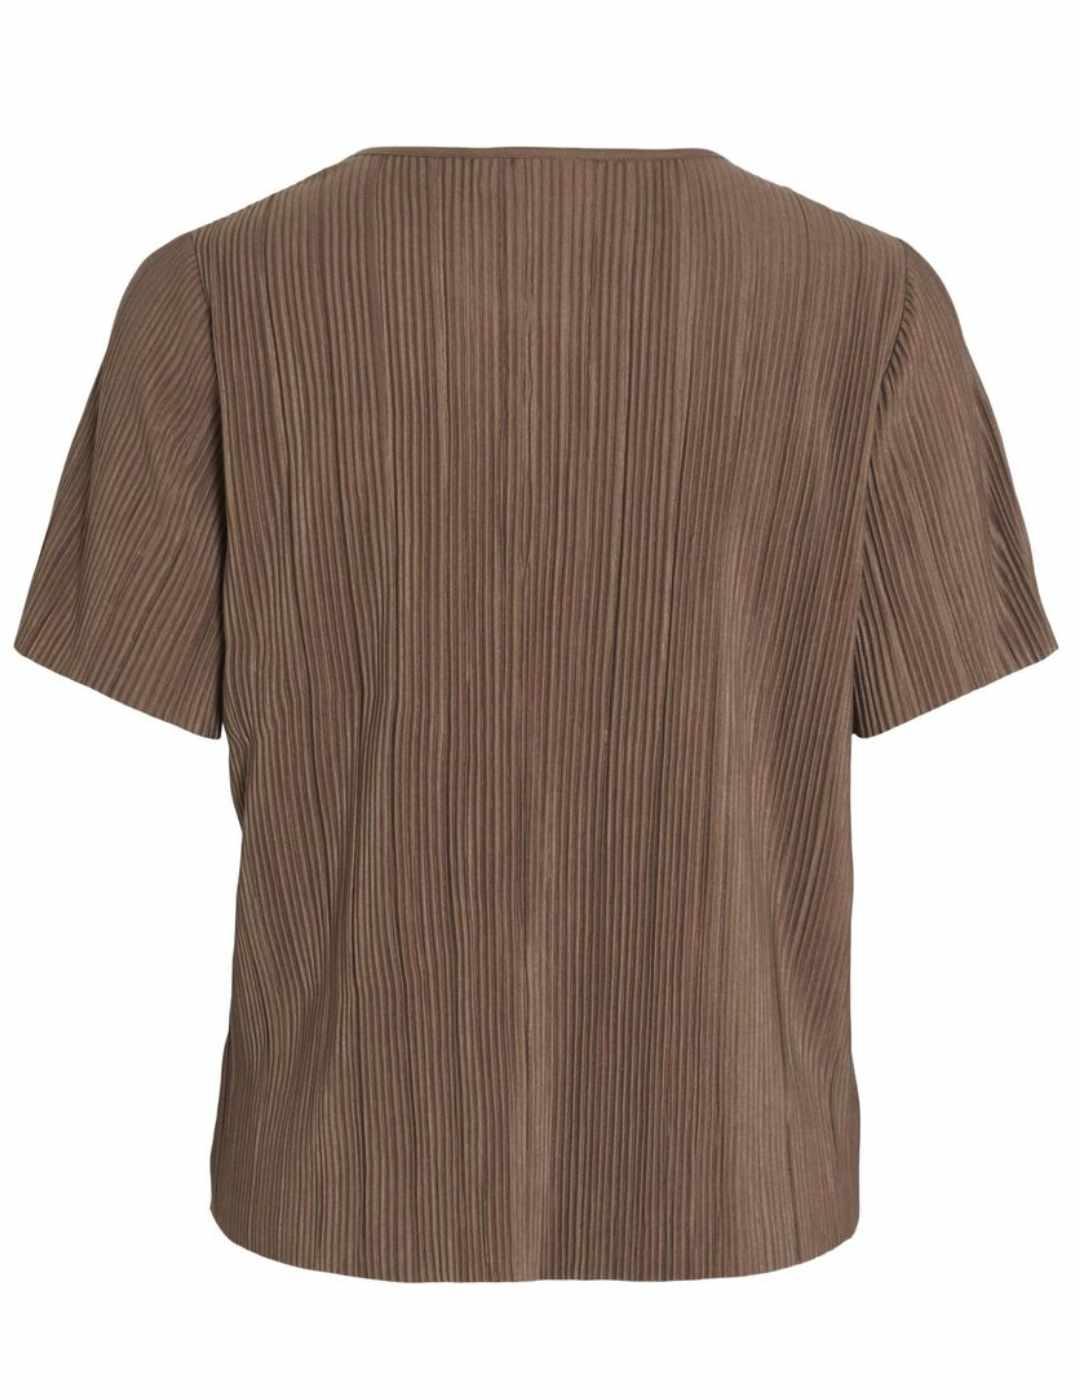 Camiseta Vila Plisa marrón Regular de manga corta para mujer